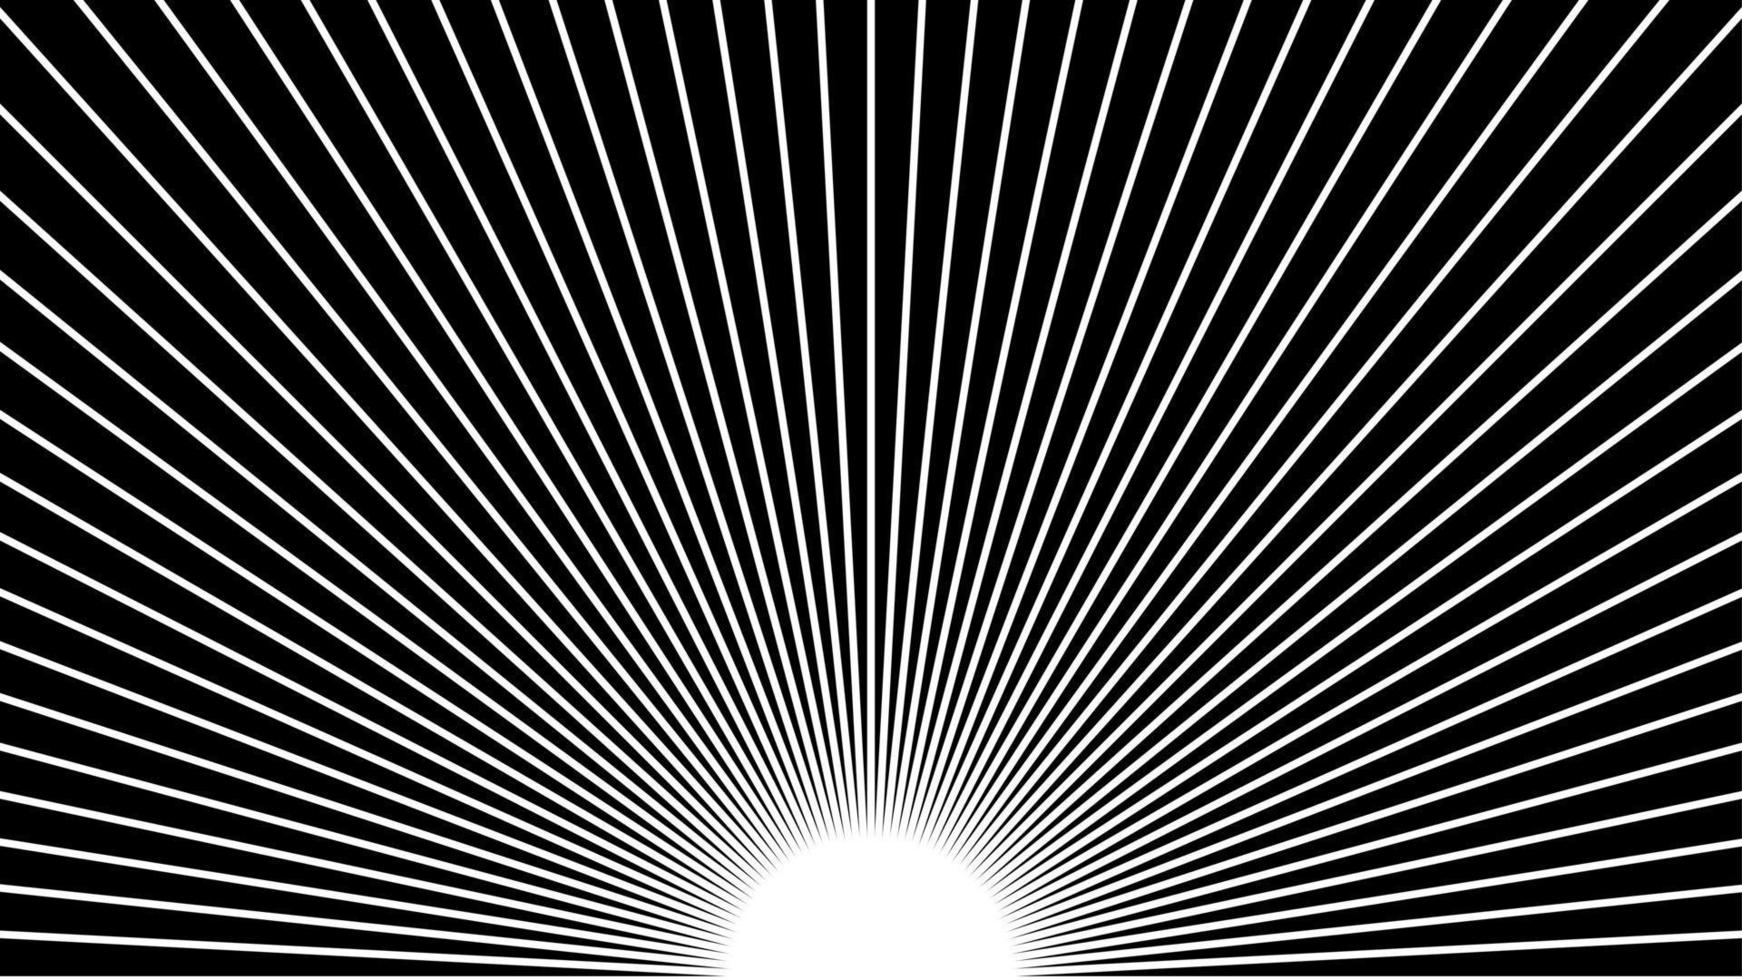 Black and white abstract sun ray background design. Modern line sunrise vector art.